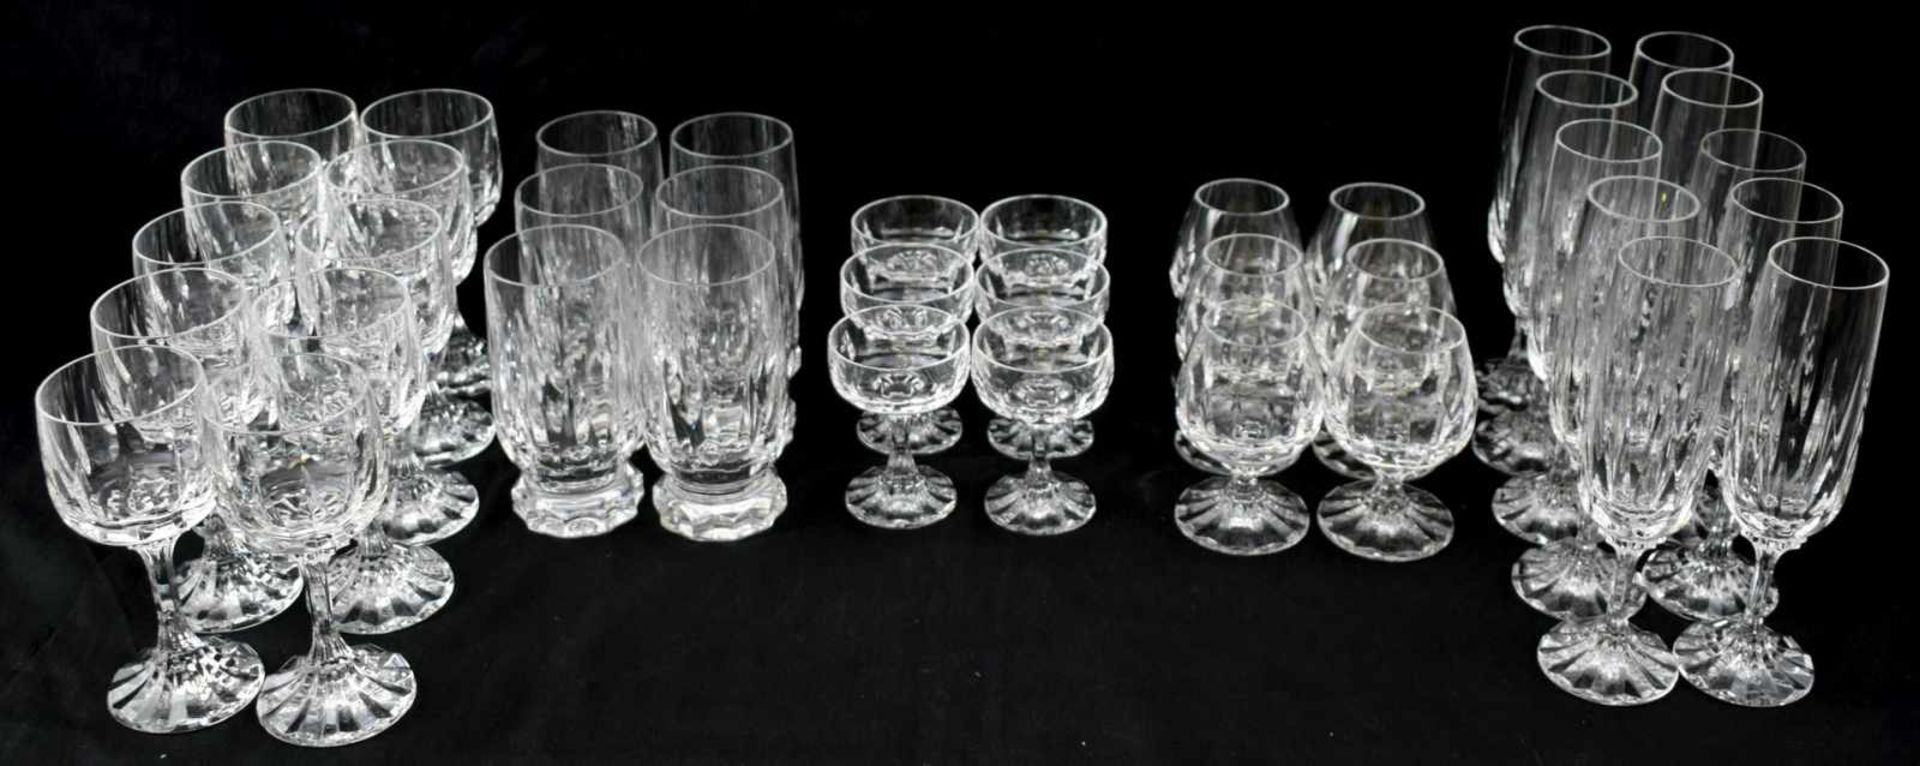 Konvolut Gläser für sechs Personen, 38 Gläser, farbl. Kristallglas, Kelch geschliffen, 10